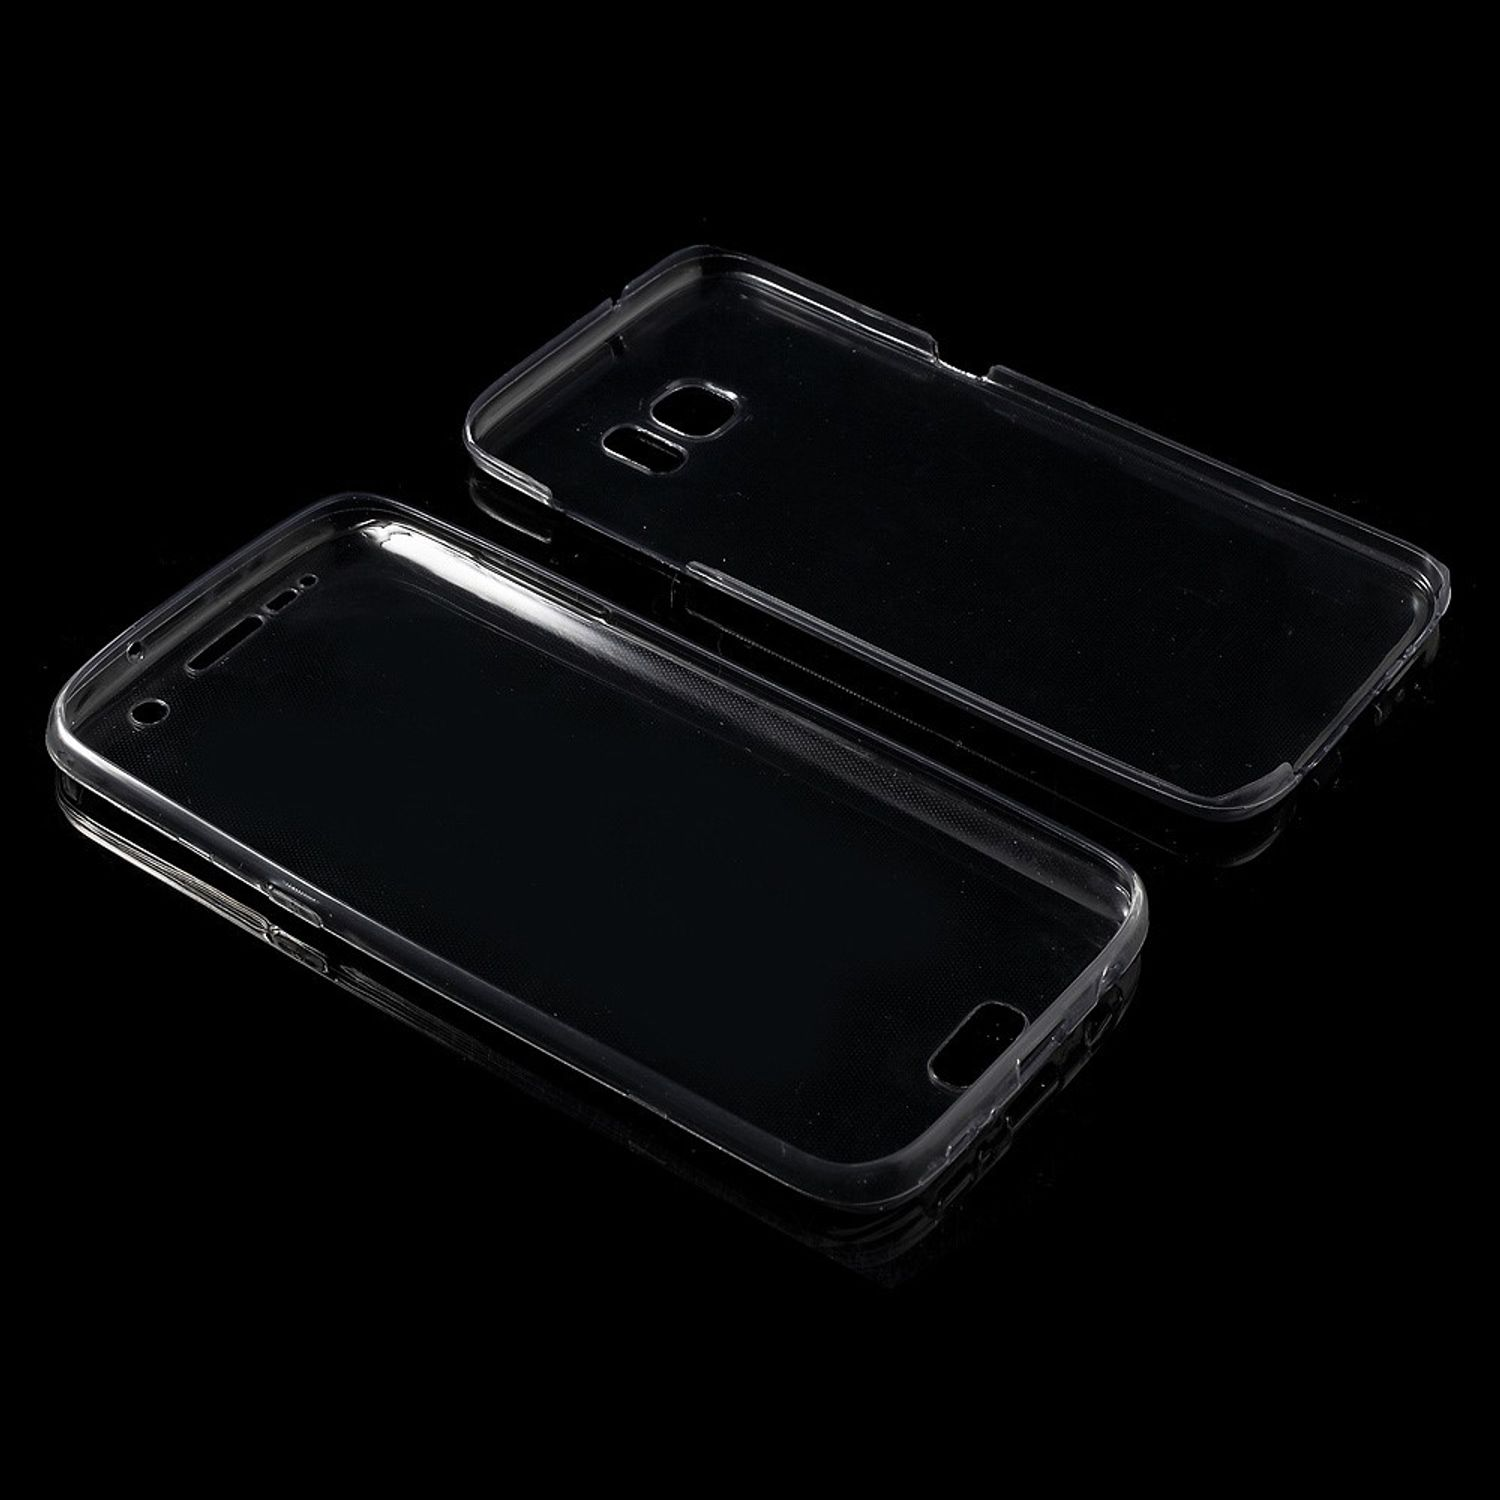 Edge, DESIGN Schutzhülle, Galaxy KÖNIG Backcover, Transparent Samsung, S7